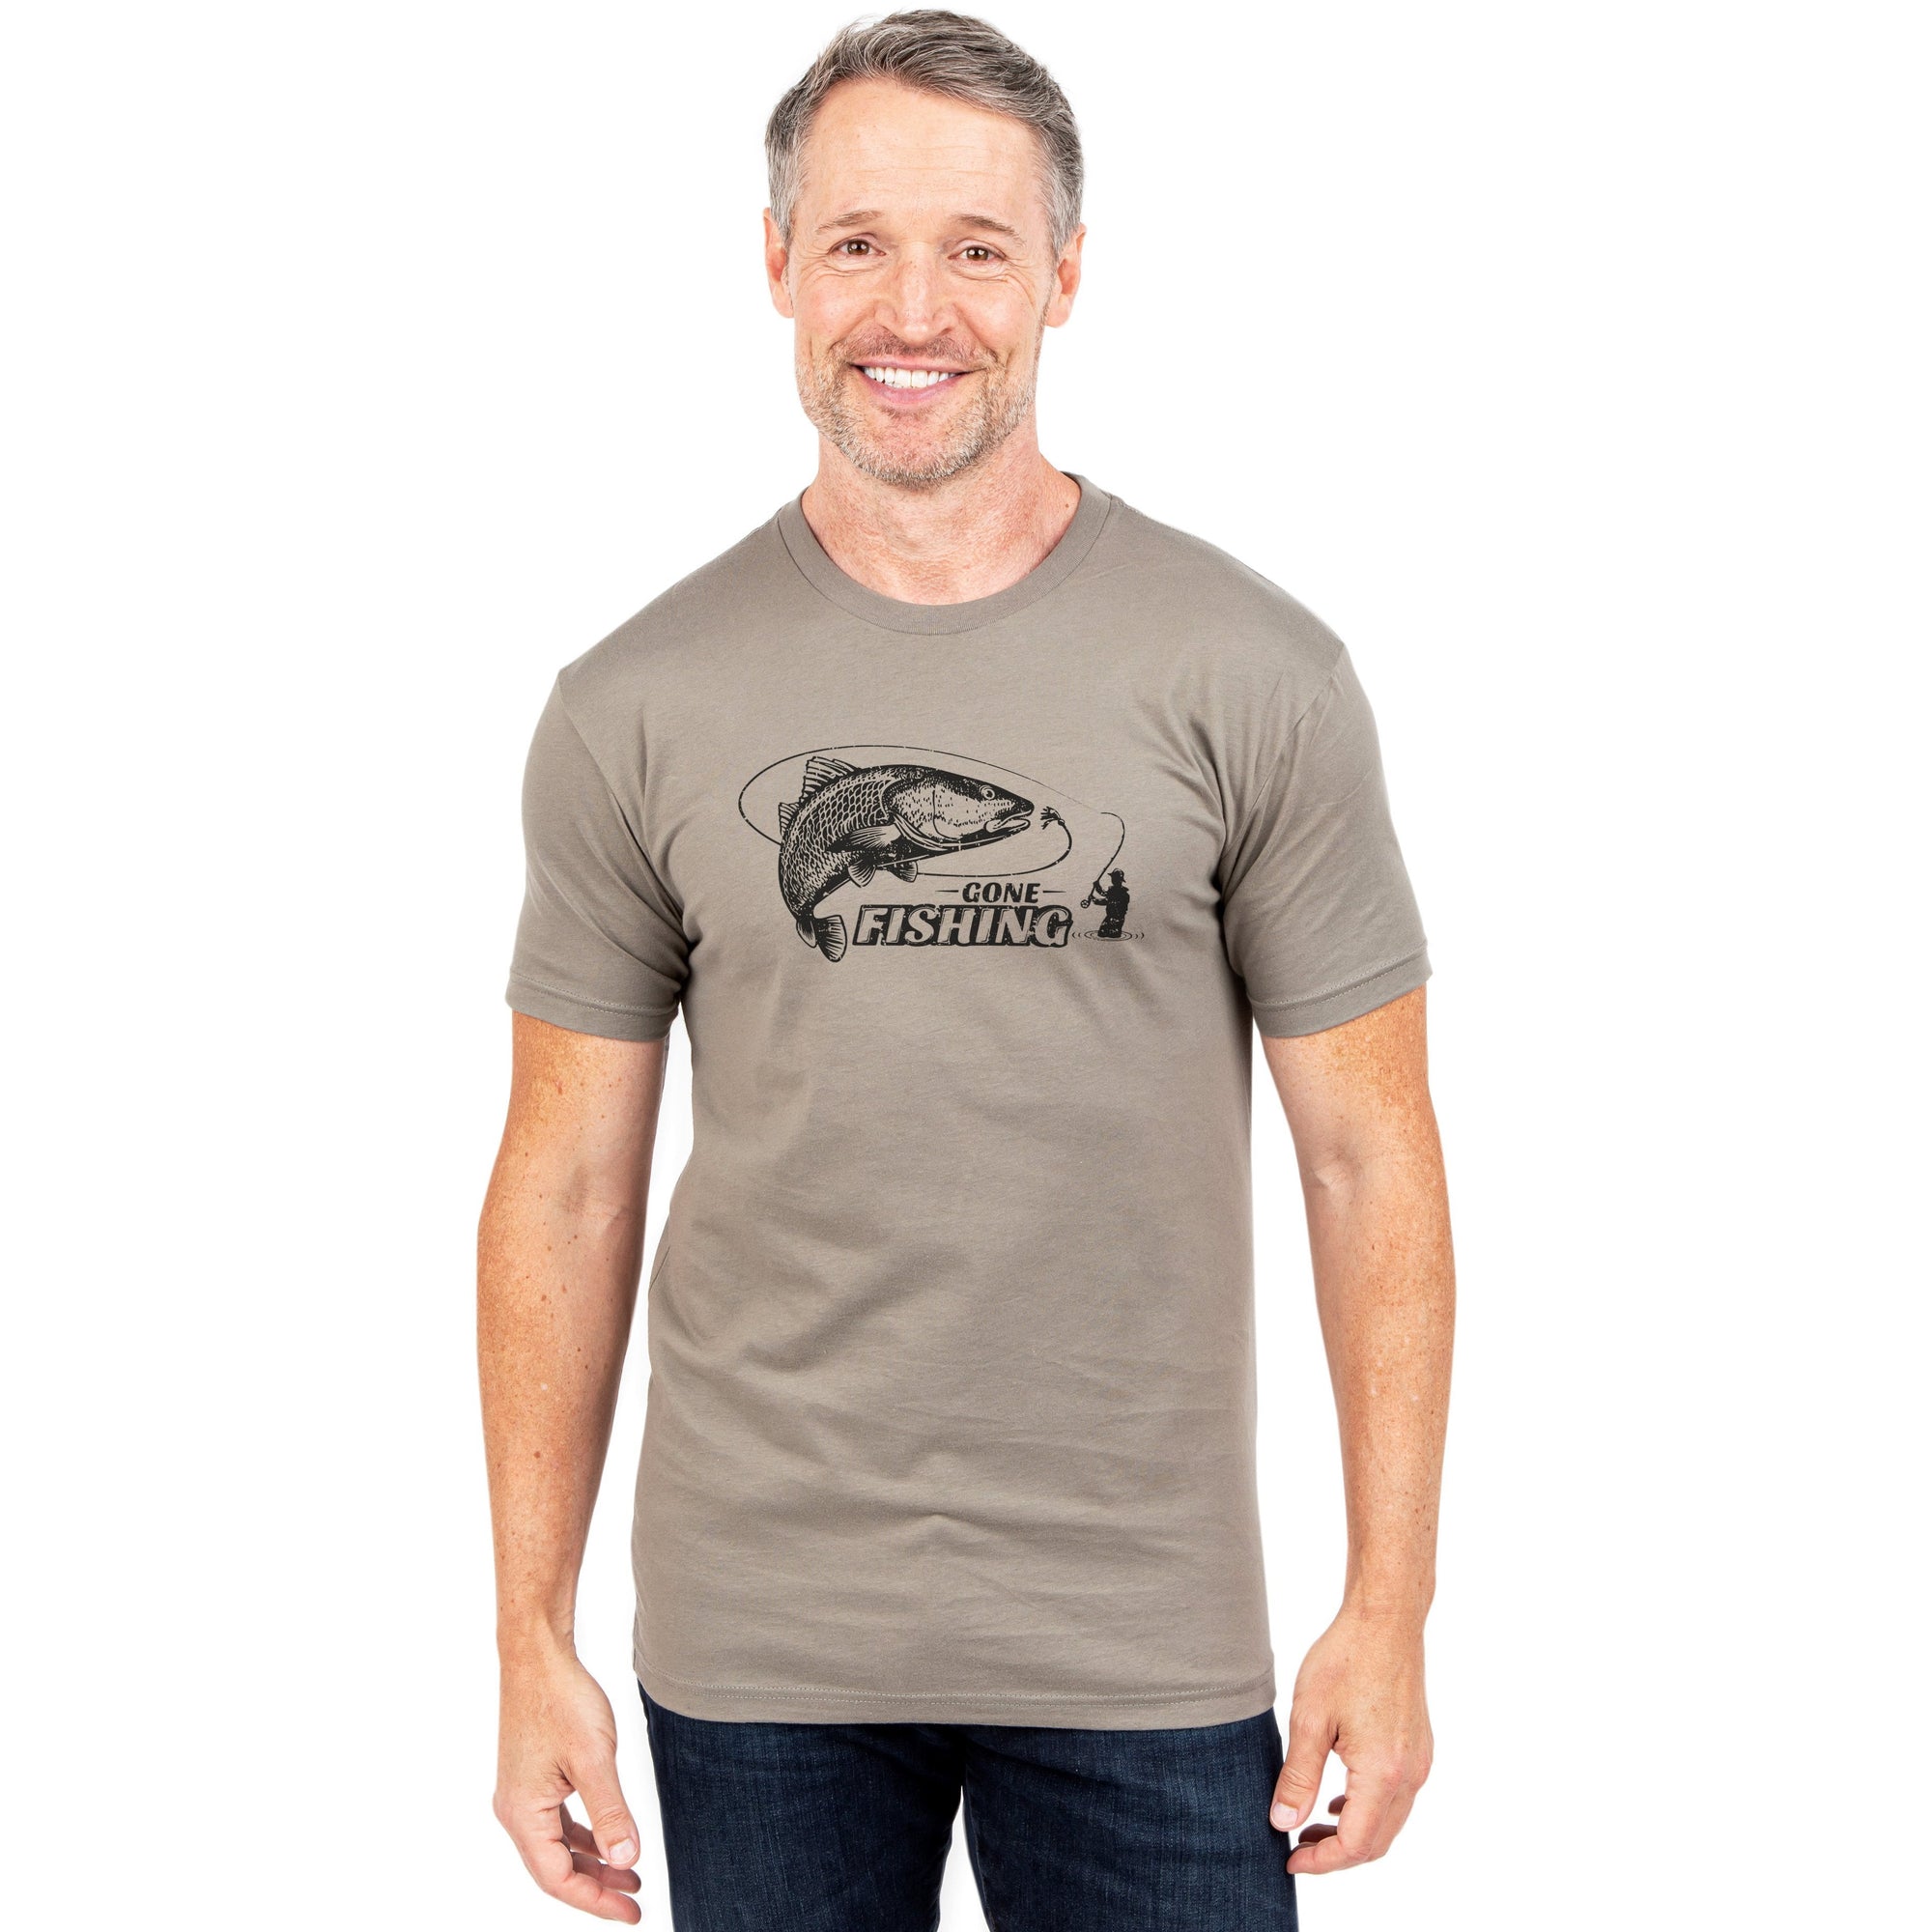 Gone Fishing Military Grey Printed Graphic Men's Crew T-Shirt Tee Model